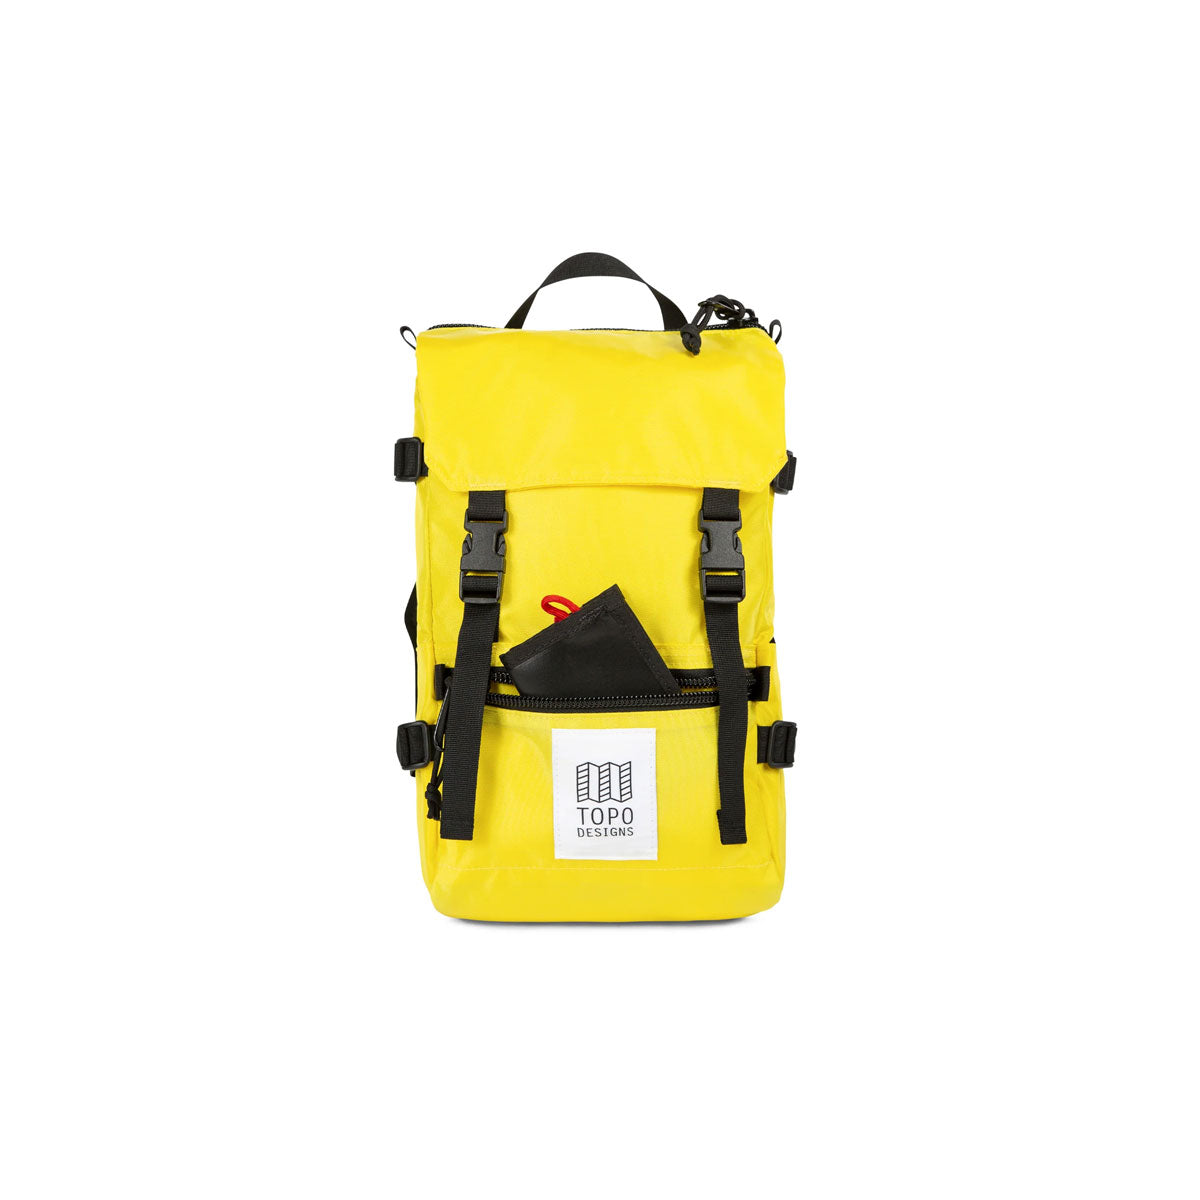 Topo Designs : Rover Pack Mini : Navy/Mustard